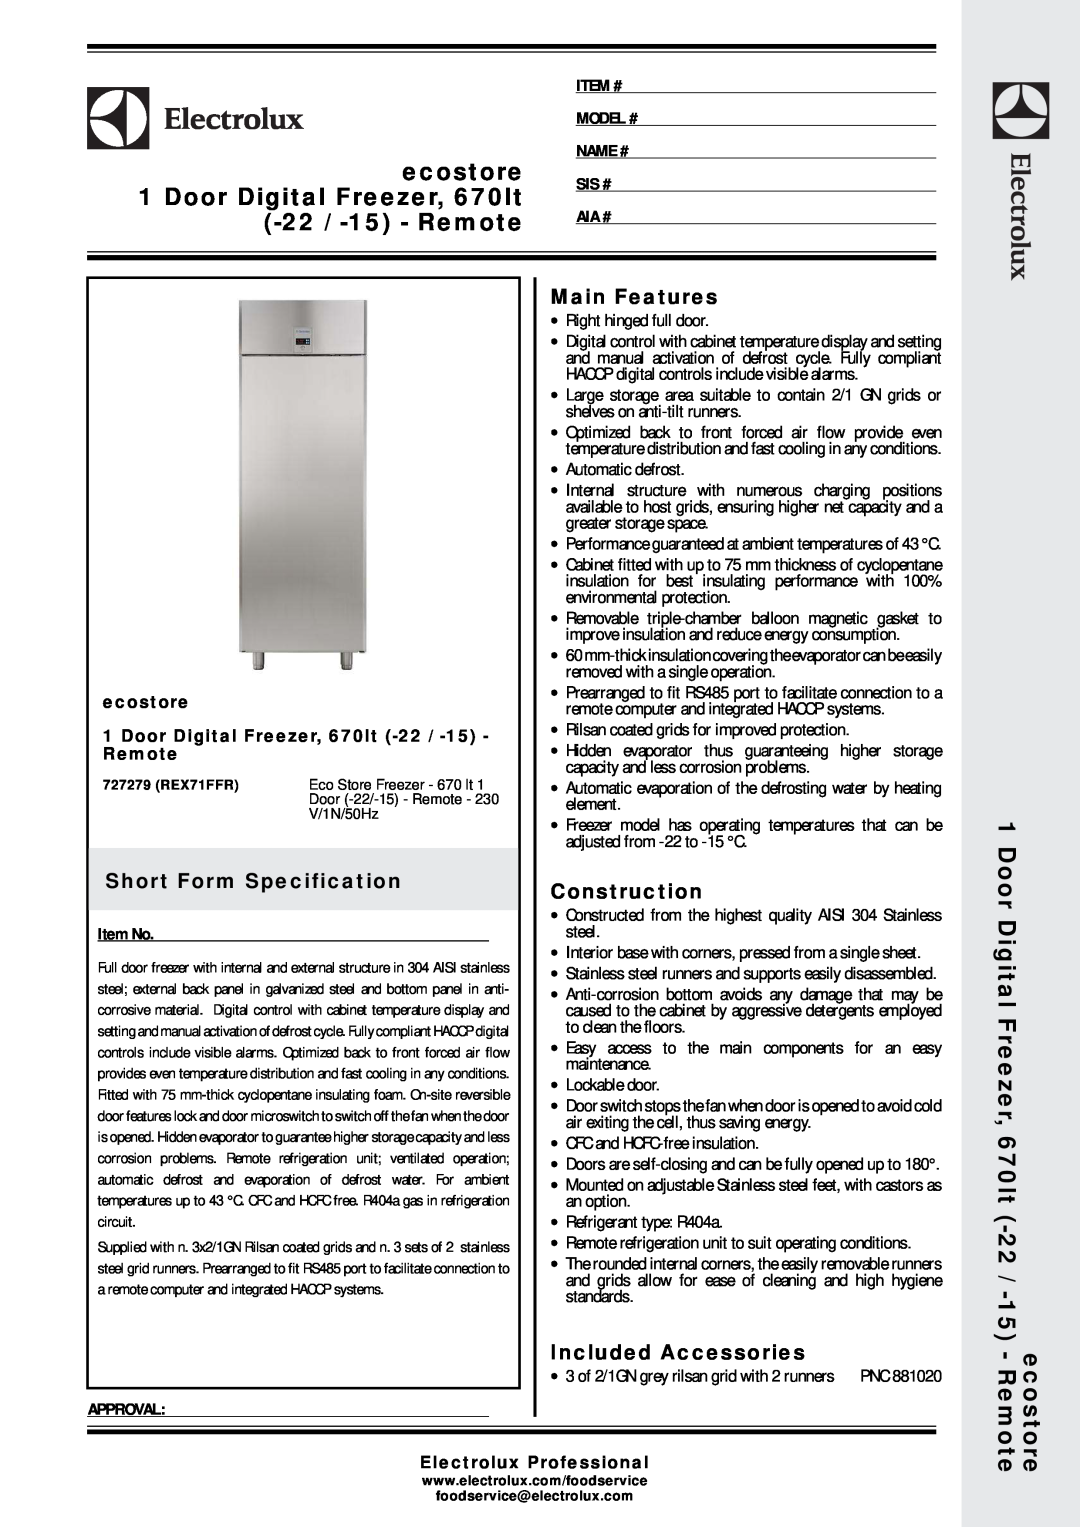 Electrolux REX71FFR manual ecostore, Door Digital Freezer, 670lt, 22 / -15 - Remote, Main Features, Construction 